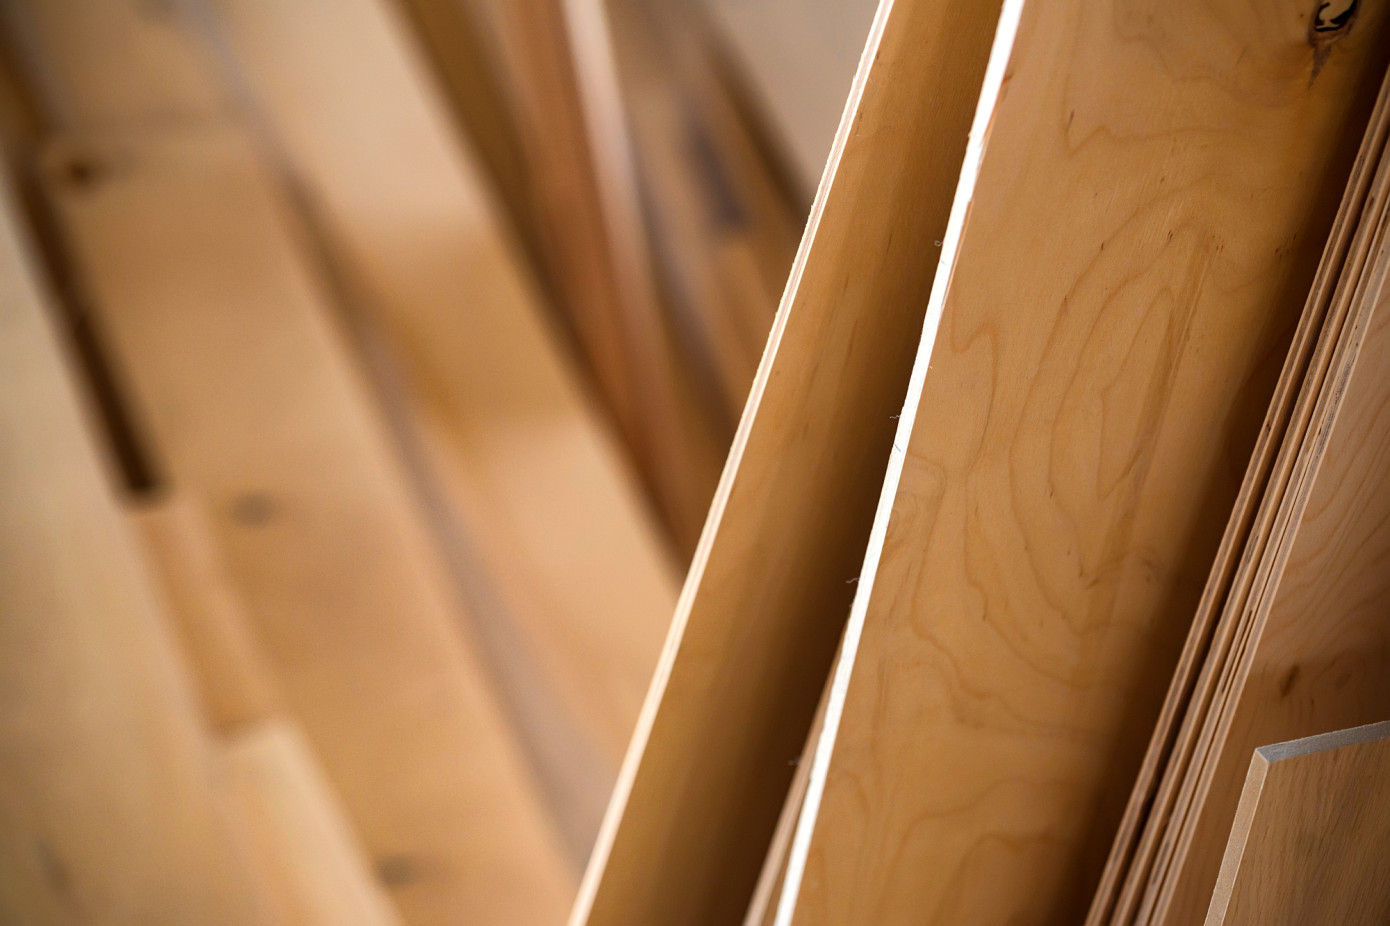 Decorative Hardwoods Association updates legal timber due diligence standard